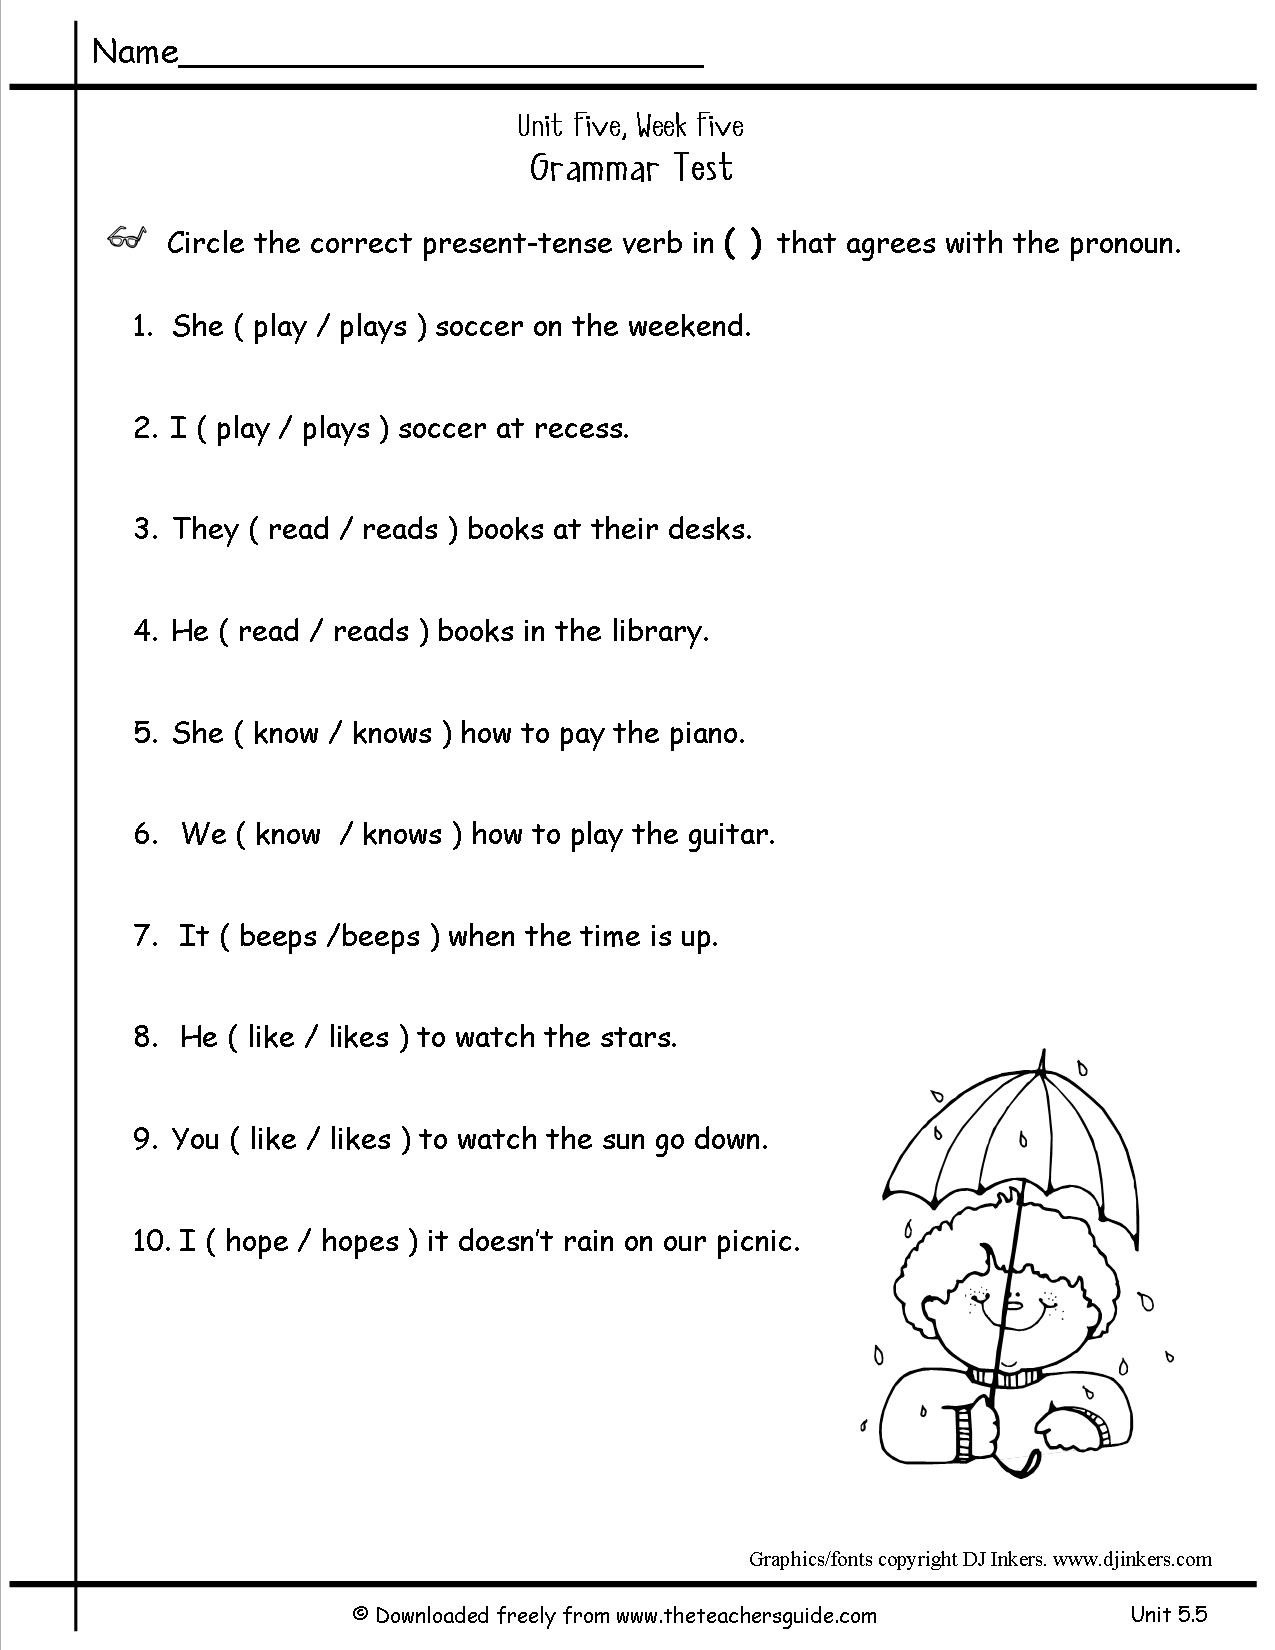 Pronoun Worksheets Second Grade Free Pronoun Worksheet for 2nd Grade